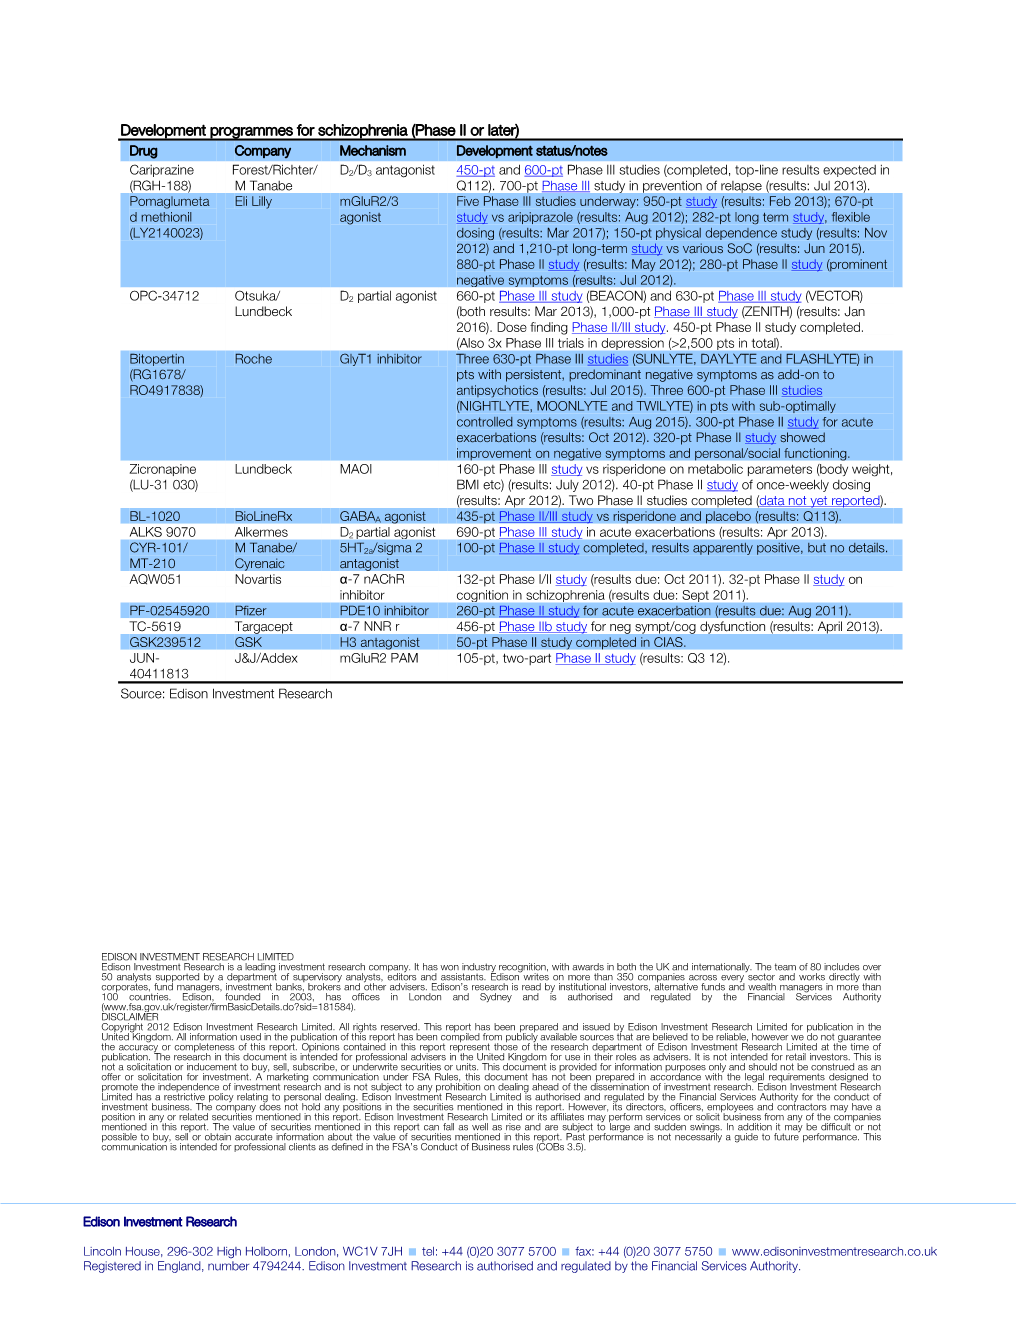 Development Programmes for Schizophrenia (Phase II Or Later) Drug Company Mechanism Development Status/Notes